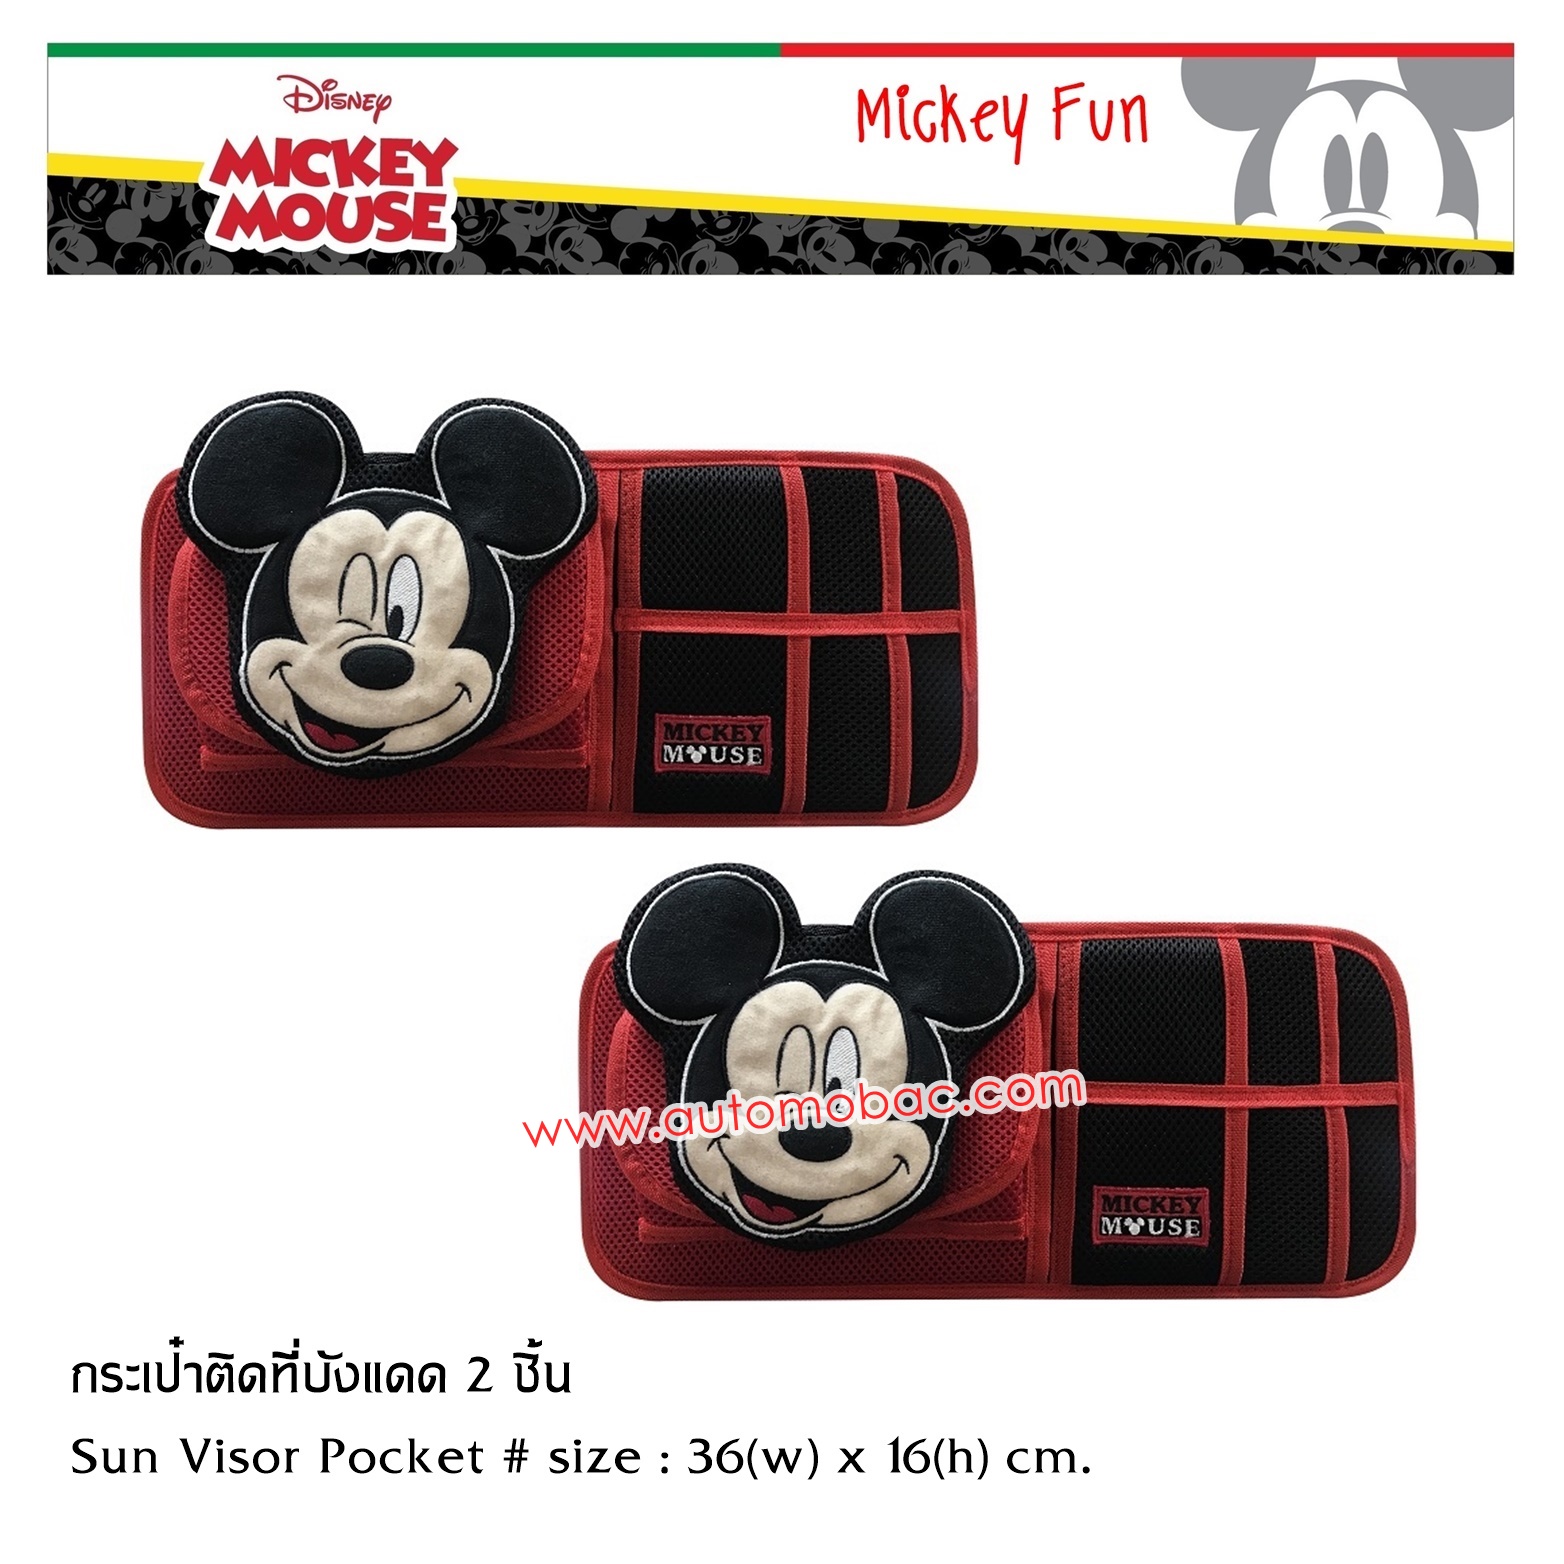 Mickey Mouse FUN กระเป๋าติดที่บังแดด 2 ใบ มีช่องใส่แว่นตา นามบัตร ช่วยจัดระเบียบสิ่งของภายในรถ